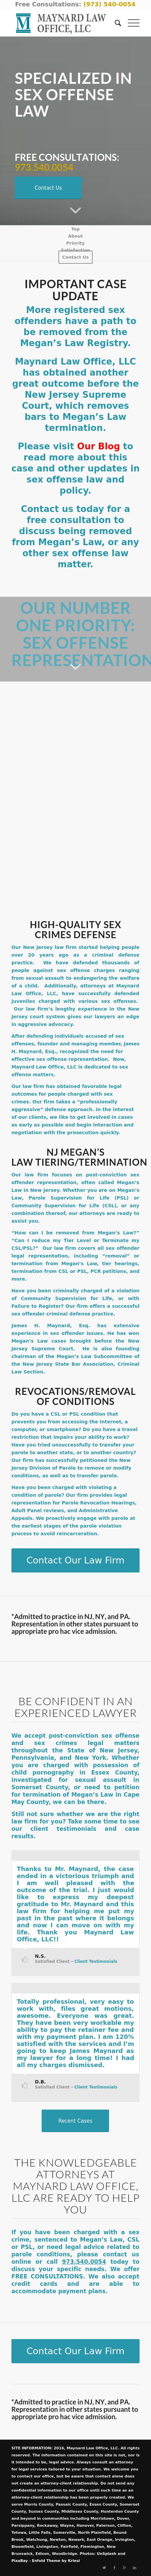 Maynard Law Office, LLC - Morristown NJ Lawyers